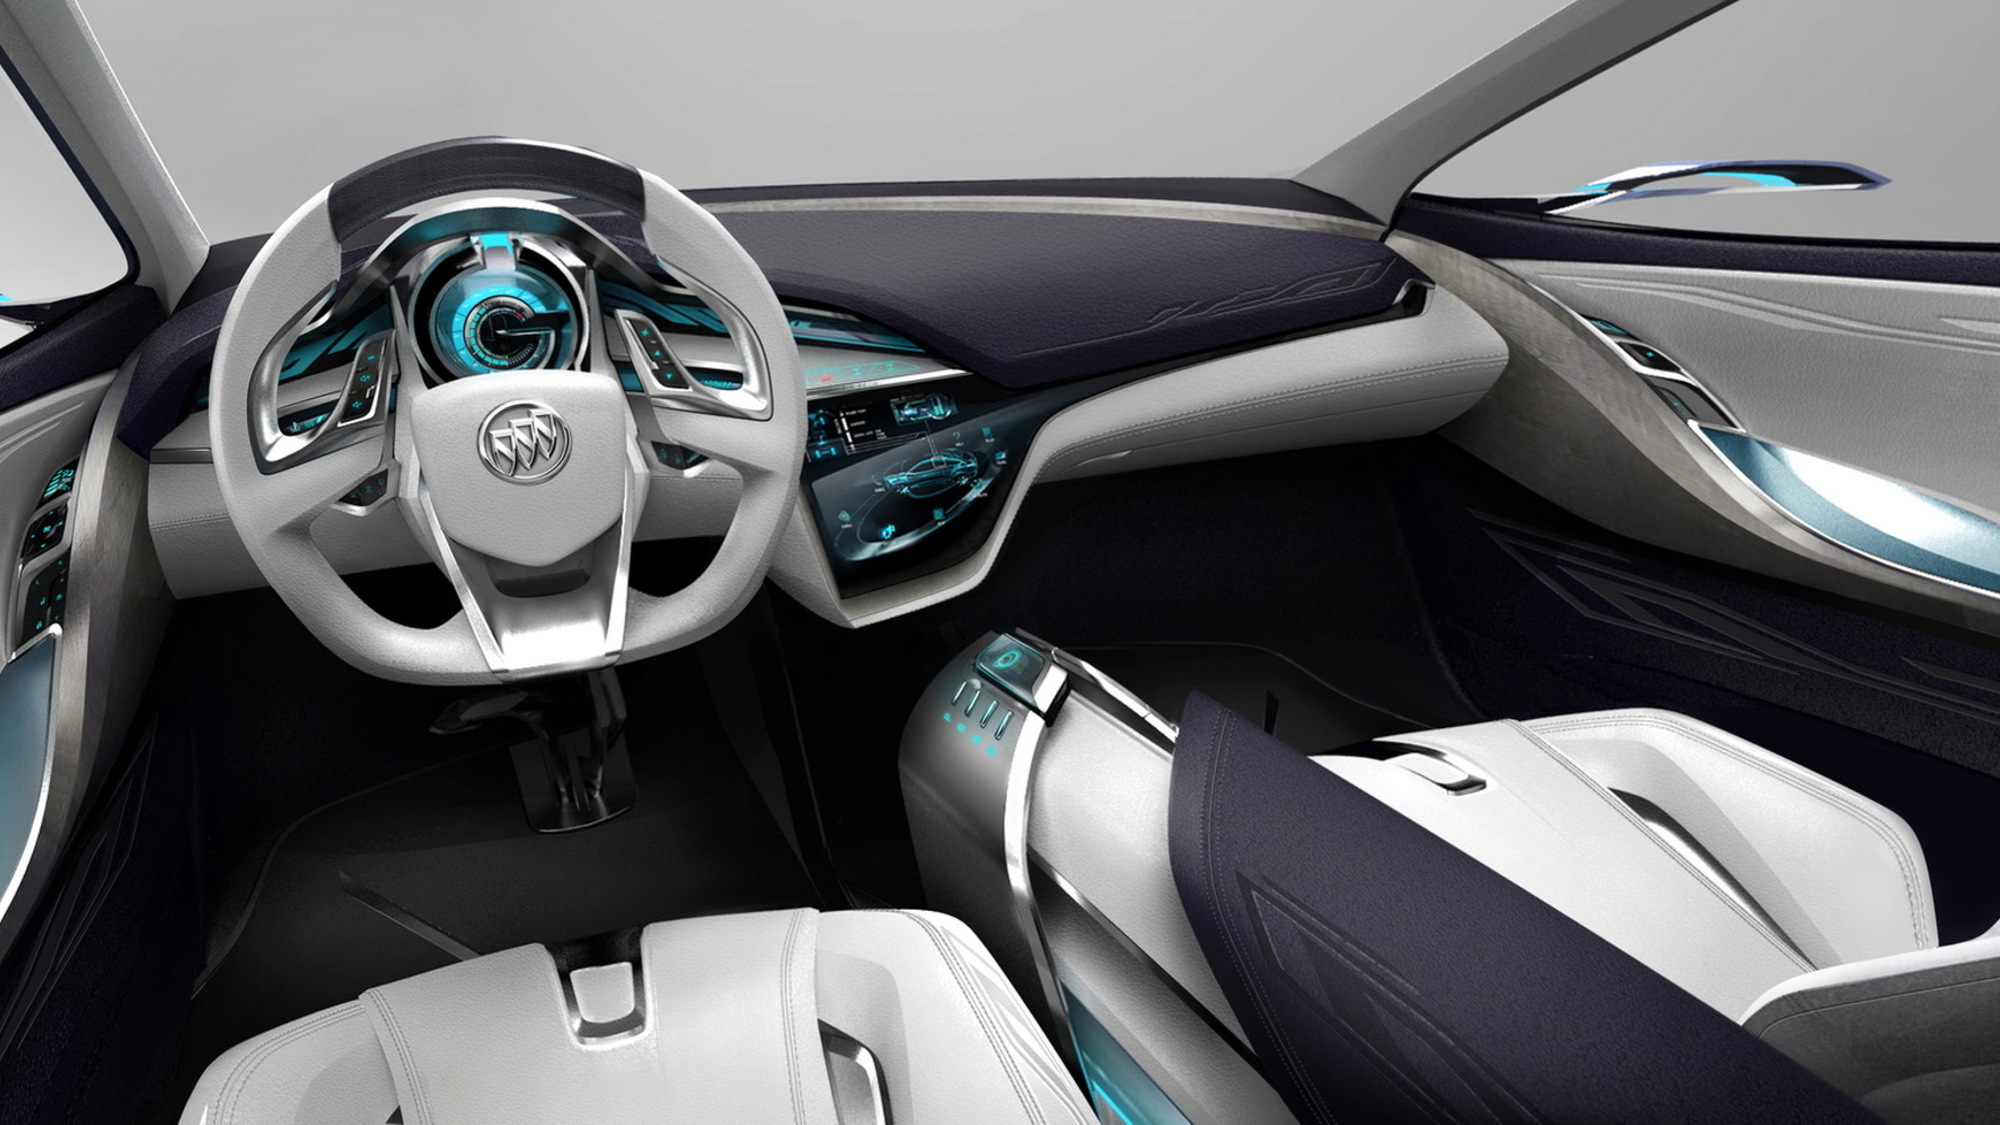 Buick Envision Concept